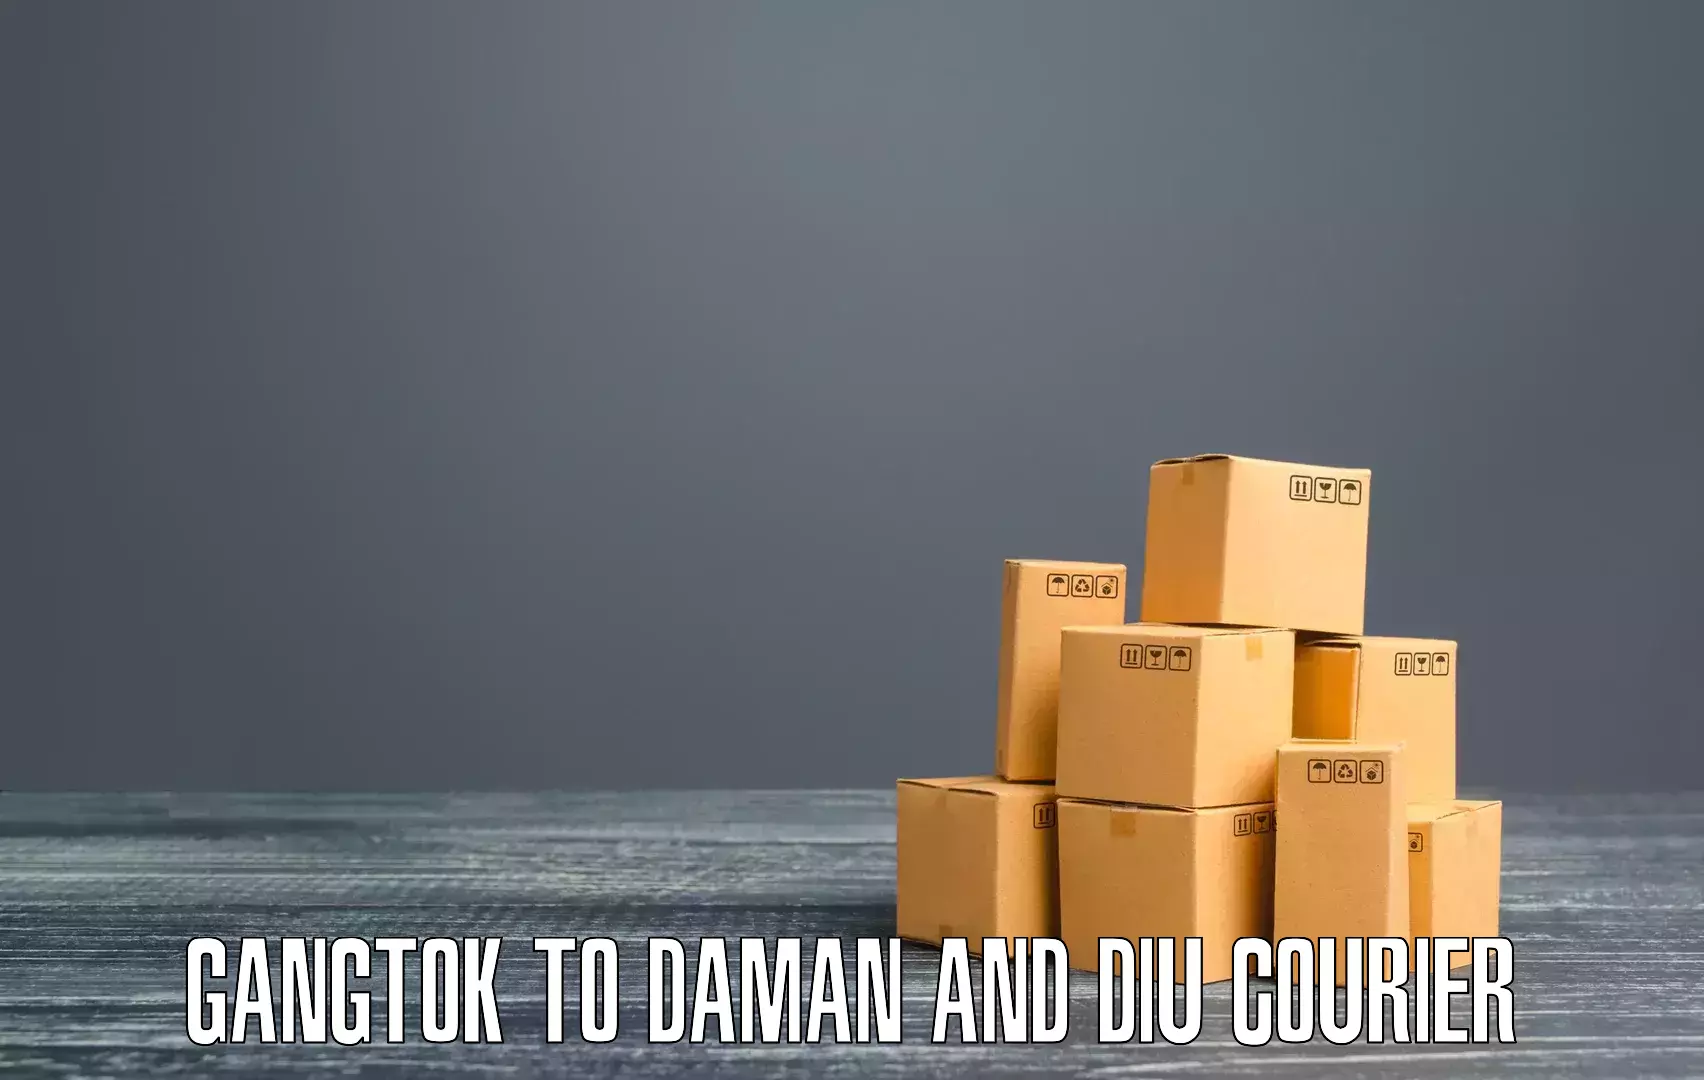 Efficient shipping operations Gangtok to Daman and Diu